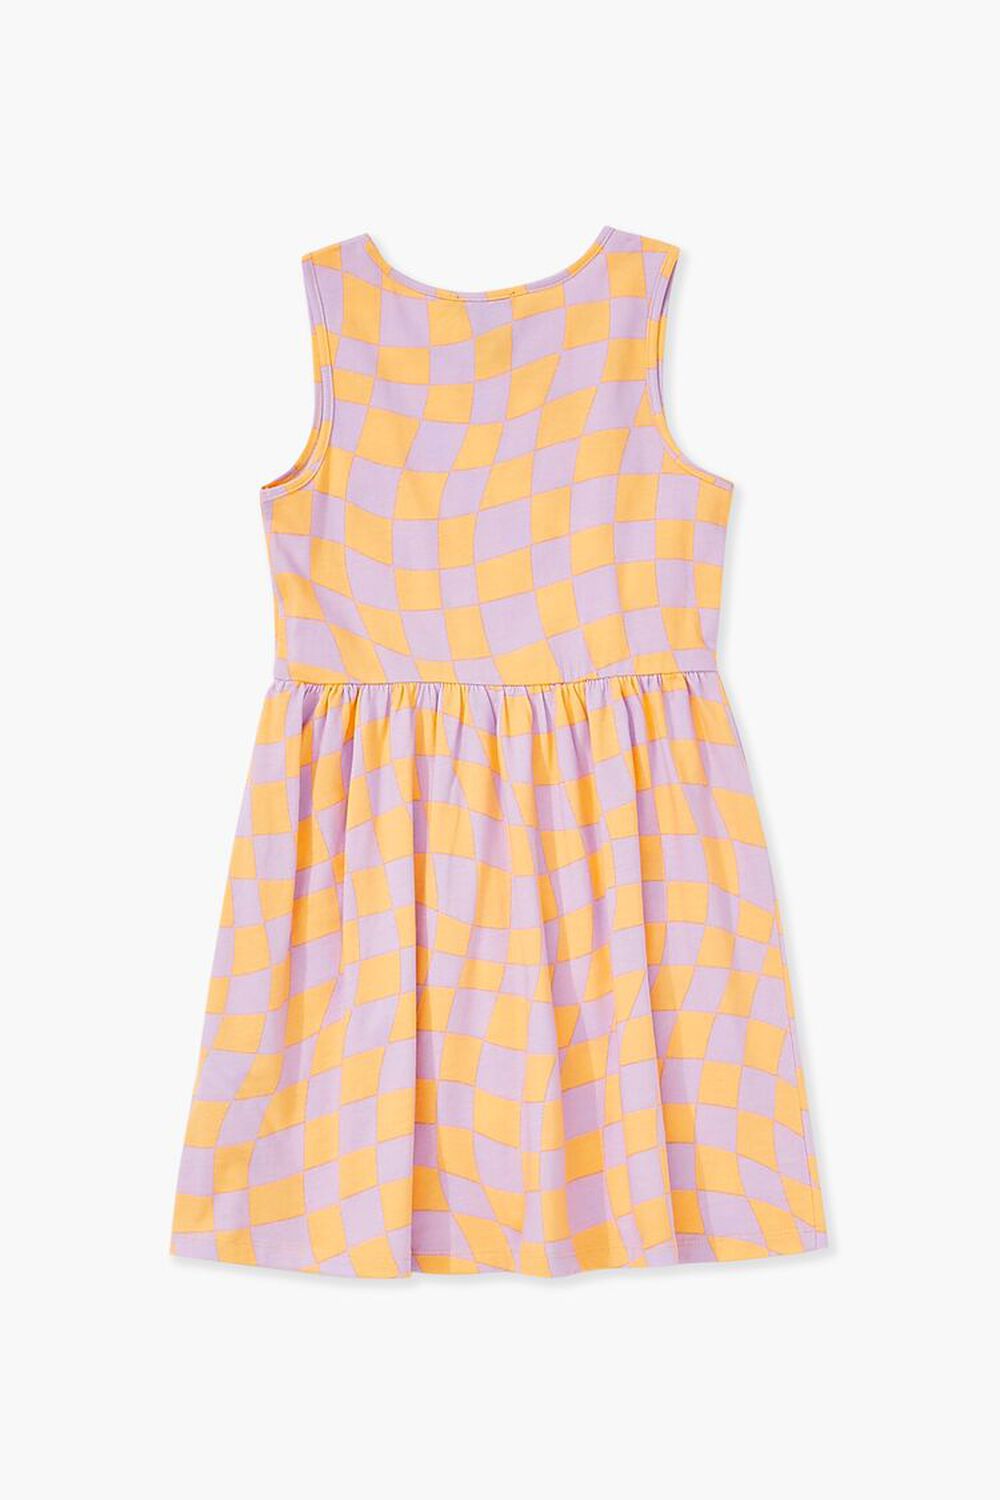 LILAC/ORANGE Girls Checkered Dress (Kids), image 2